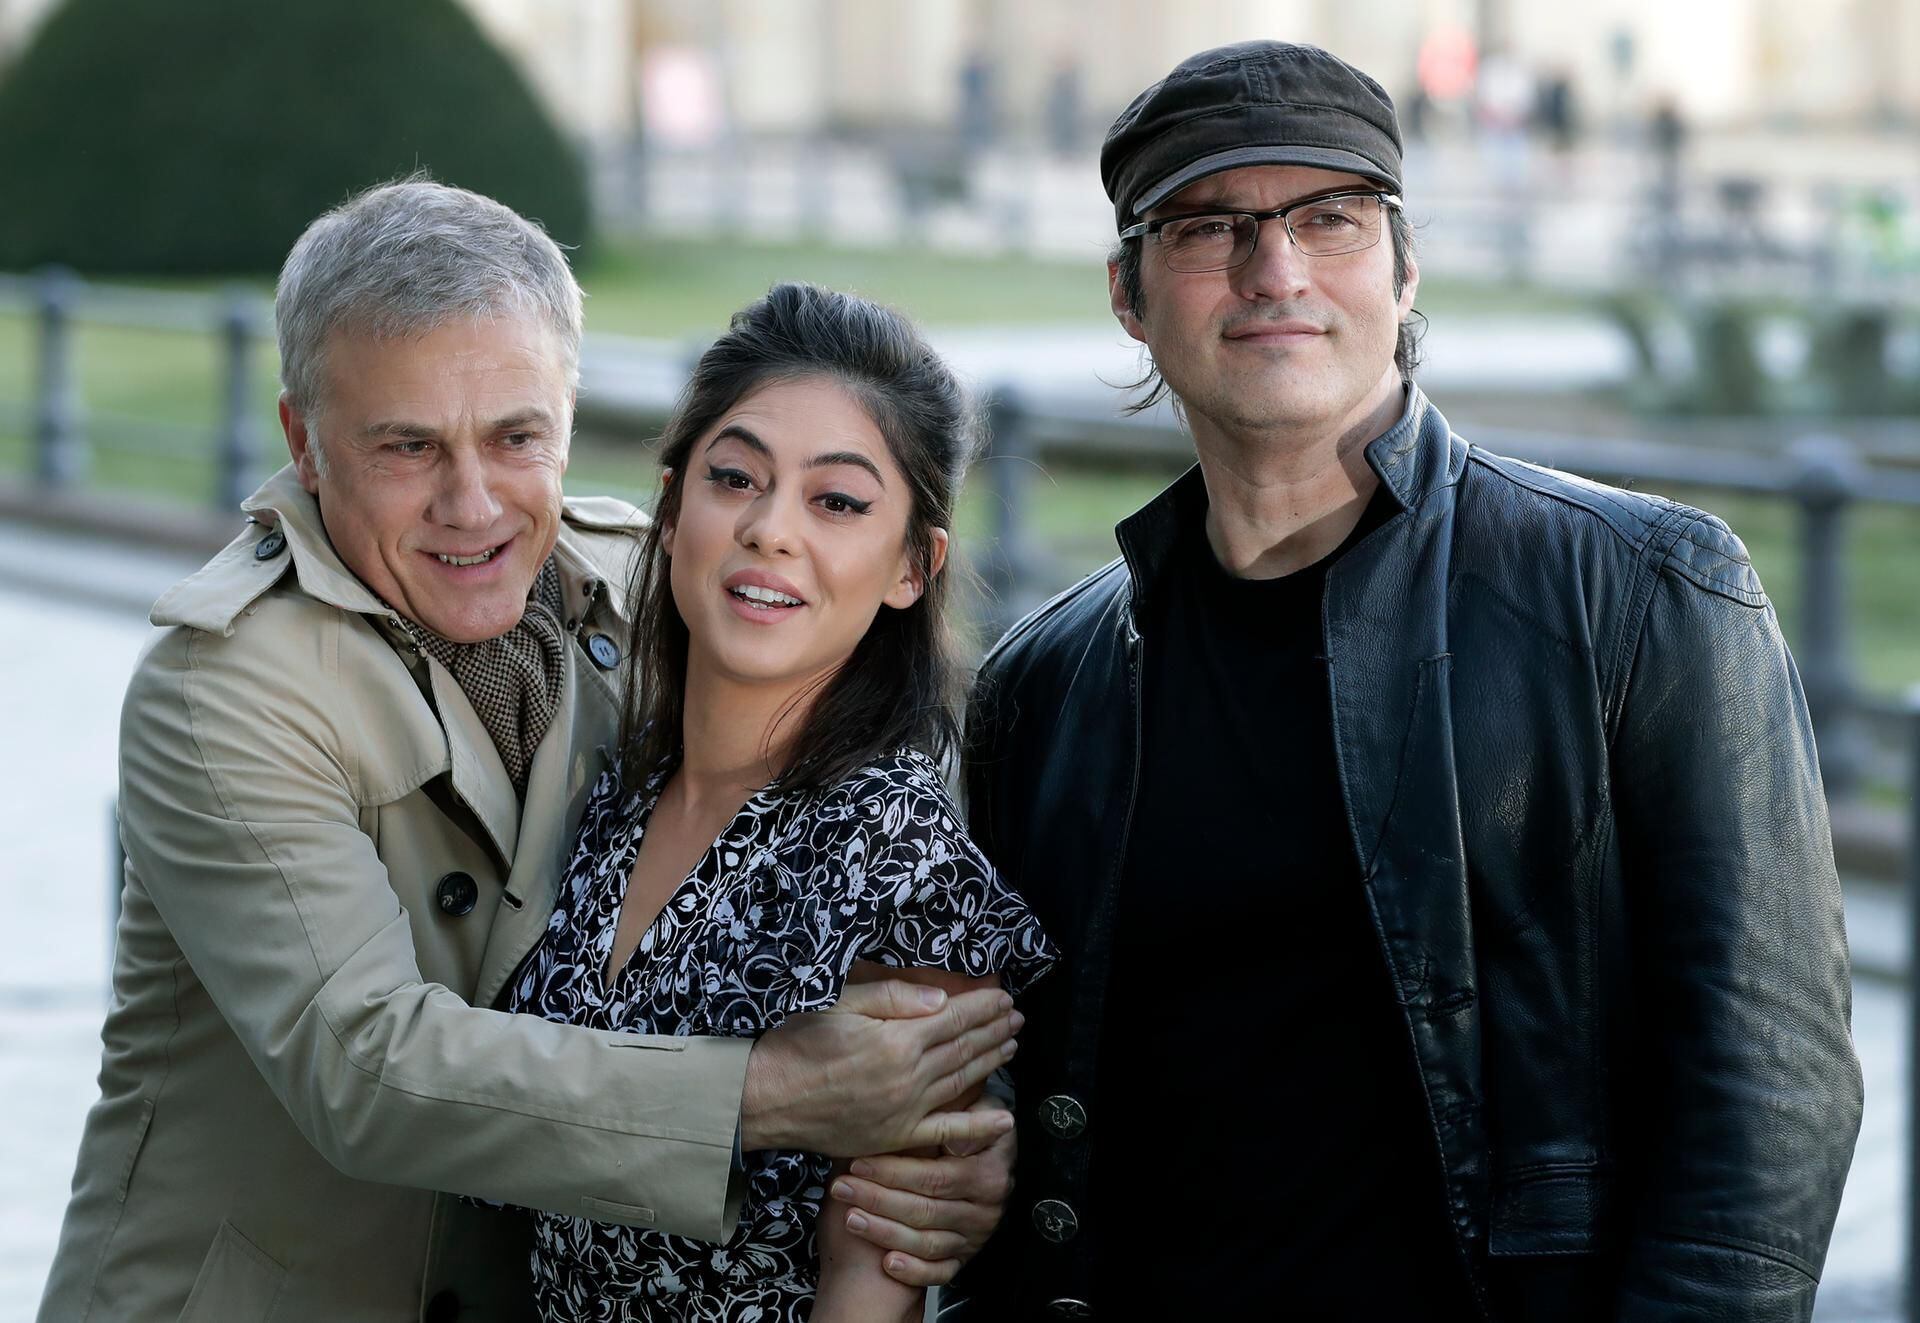 Alita' director Robert Rodriguez and stars Rosa Salazar and Christoph Waltz  on the cutting-edge film